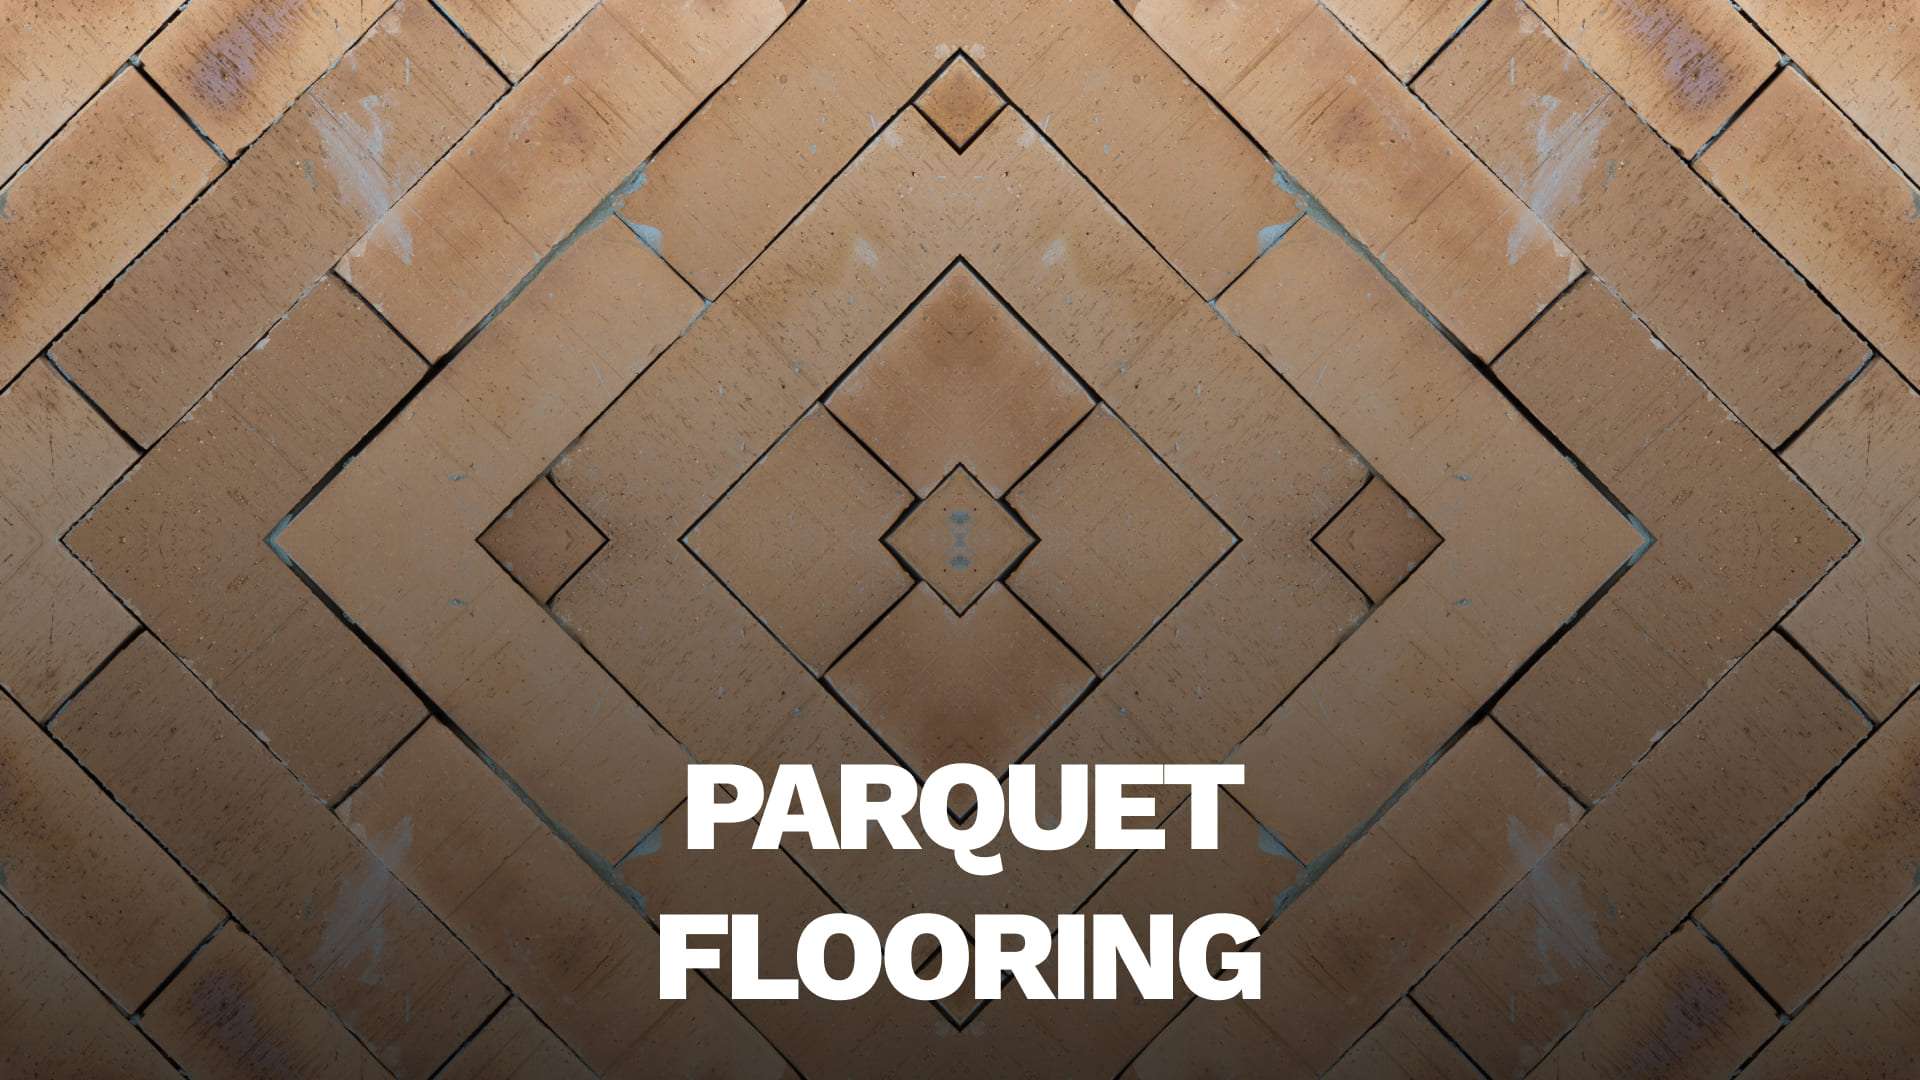 arquet Flooring